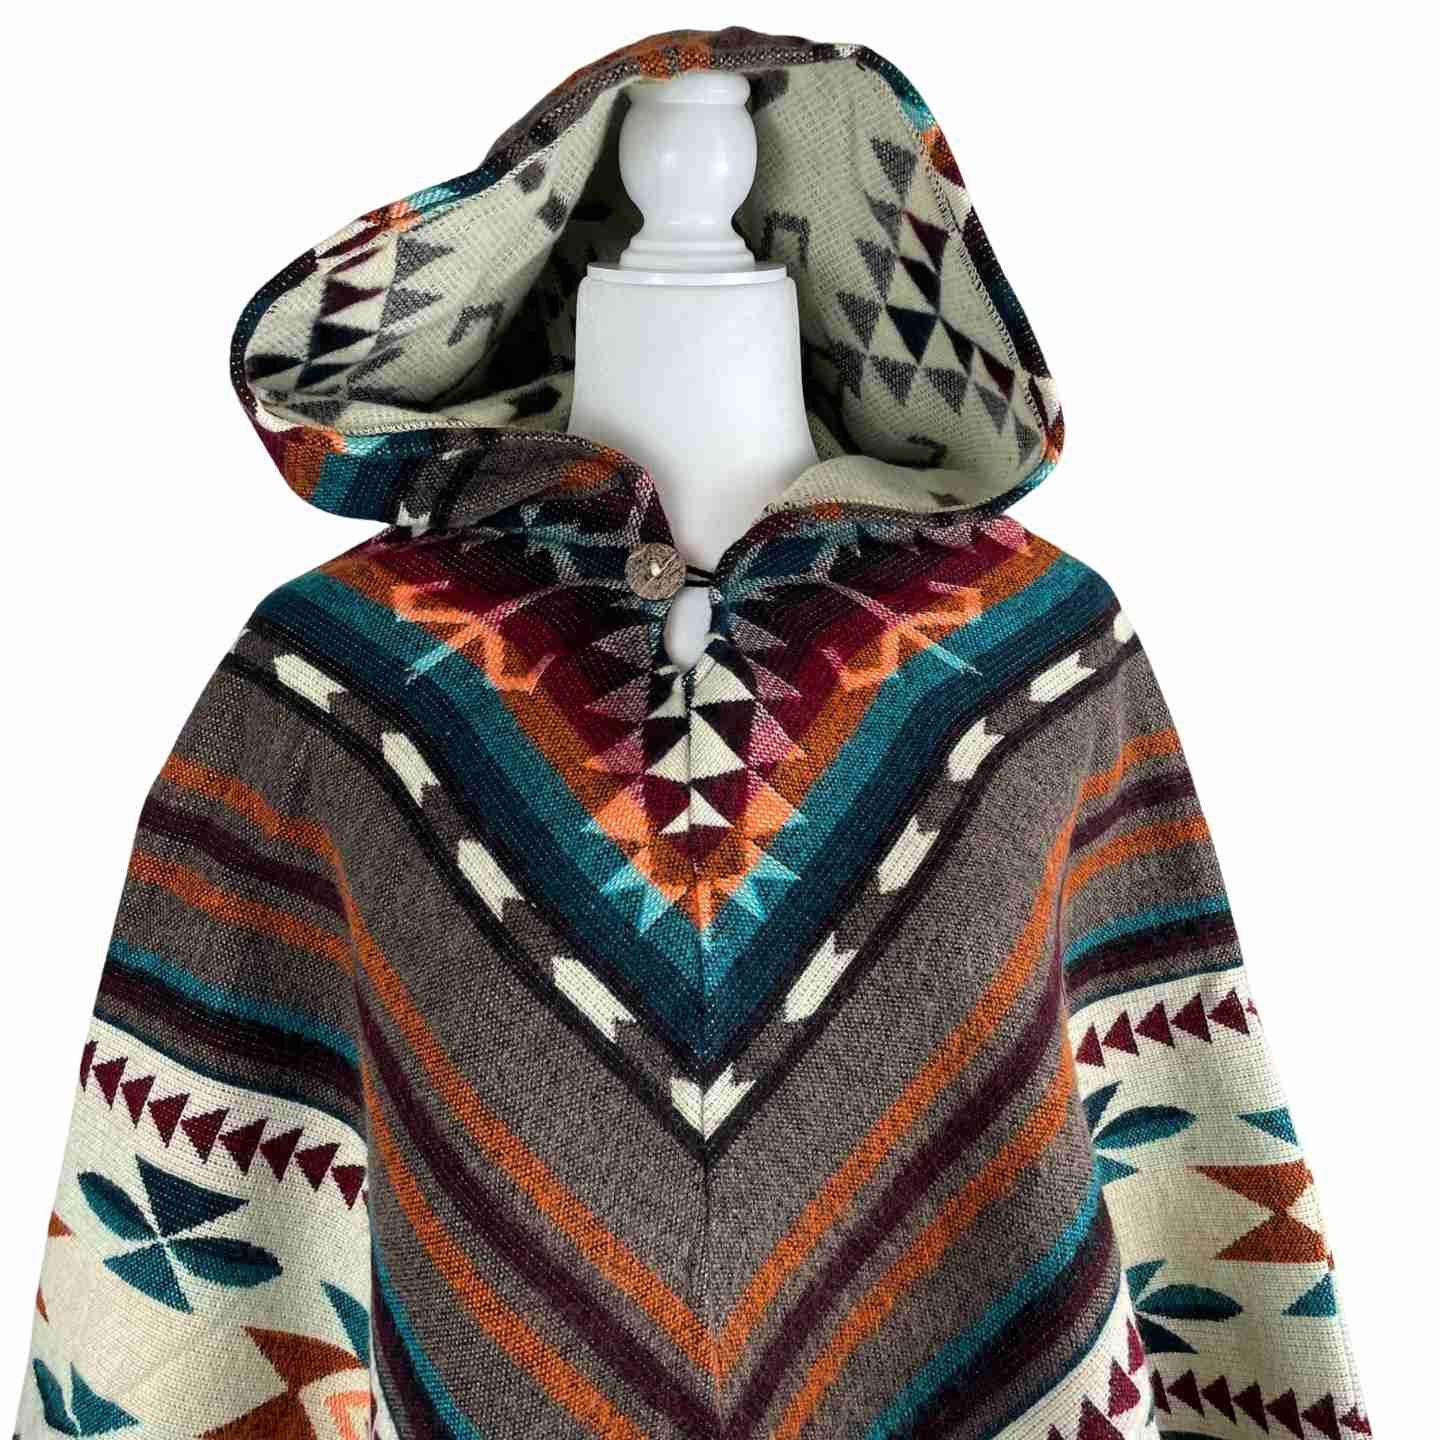 Warm Cozy Boho Alpaca Wool Hooded Poncho - Winter Soft Outerwear for Women, Gingerbread Beige V Style Cape with Tassels